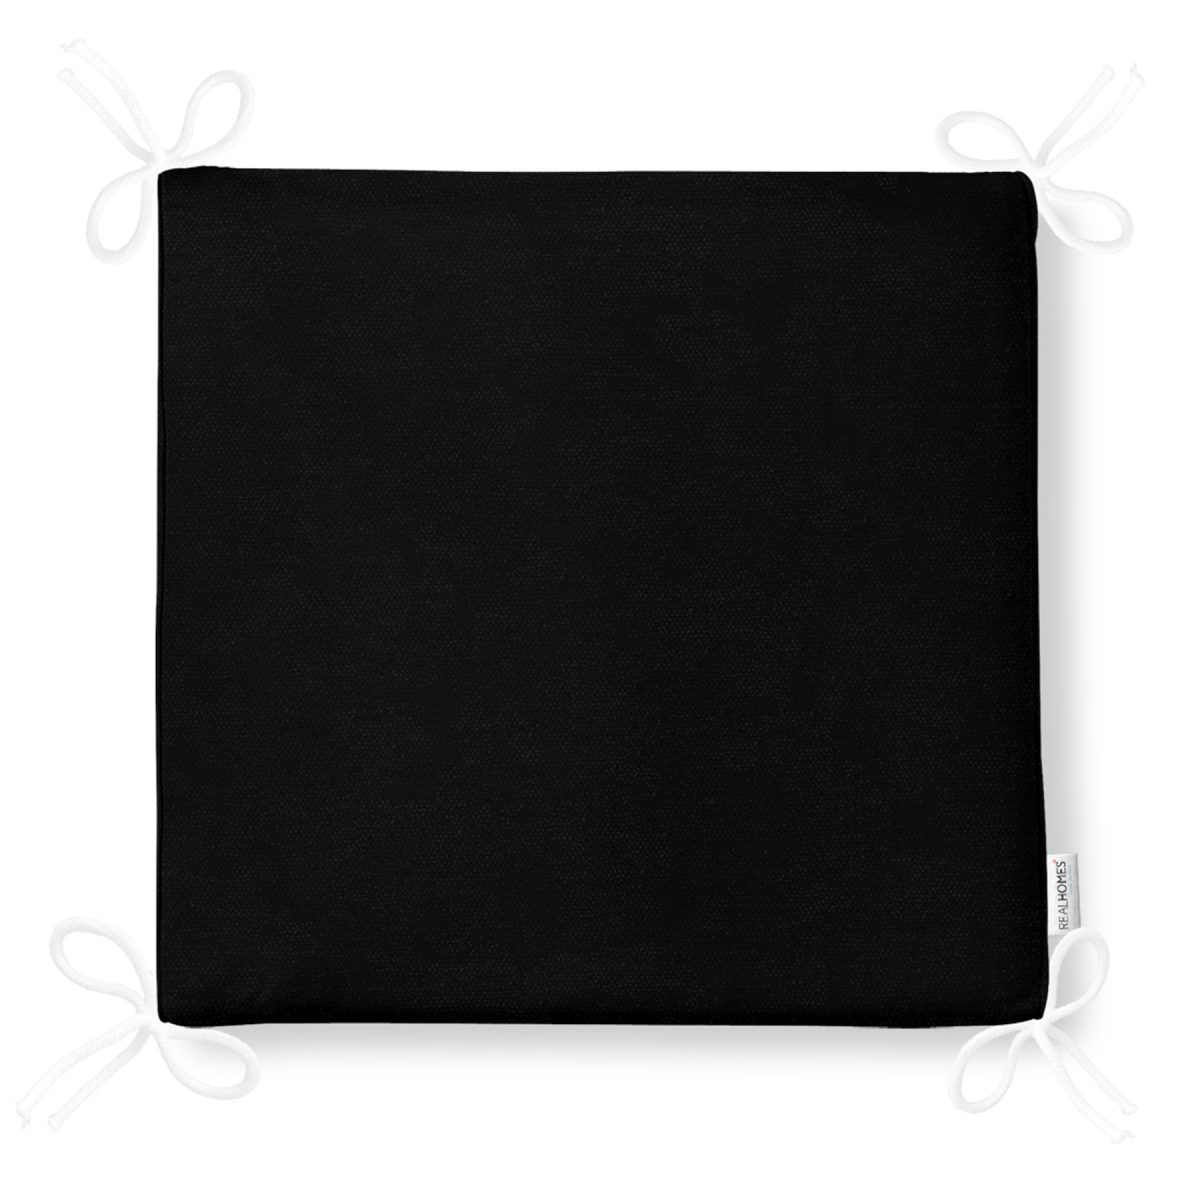 Siyah Renk Dekoratif Kare Sandalye Minderi 40x40 cm Fermuarlı Realhomes